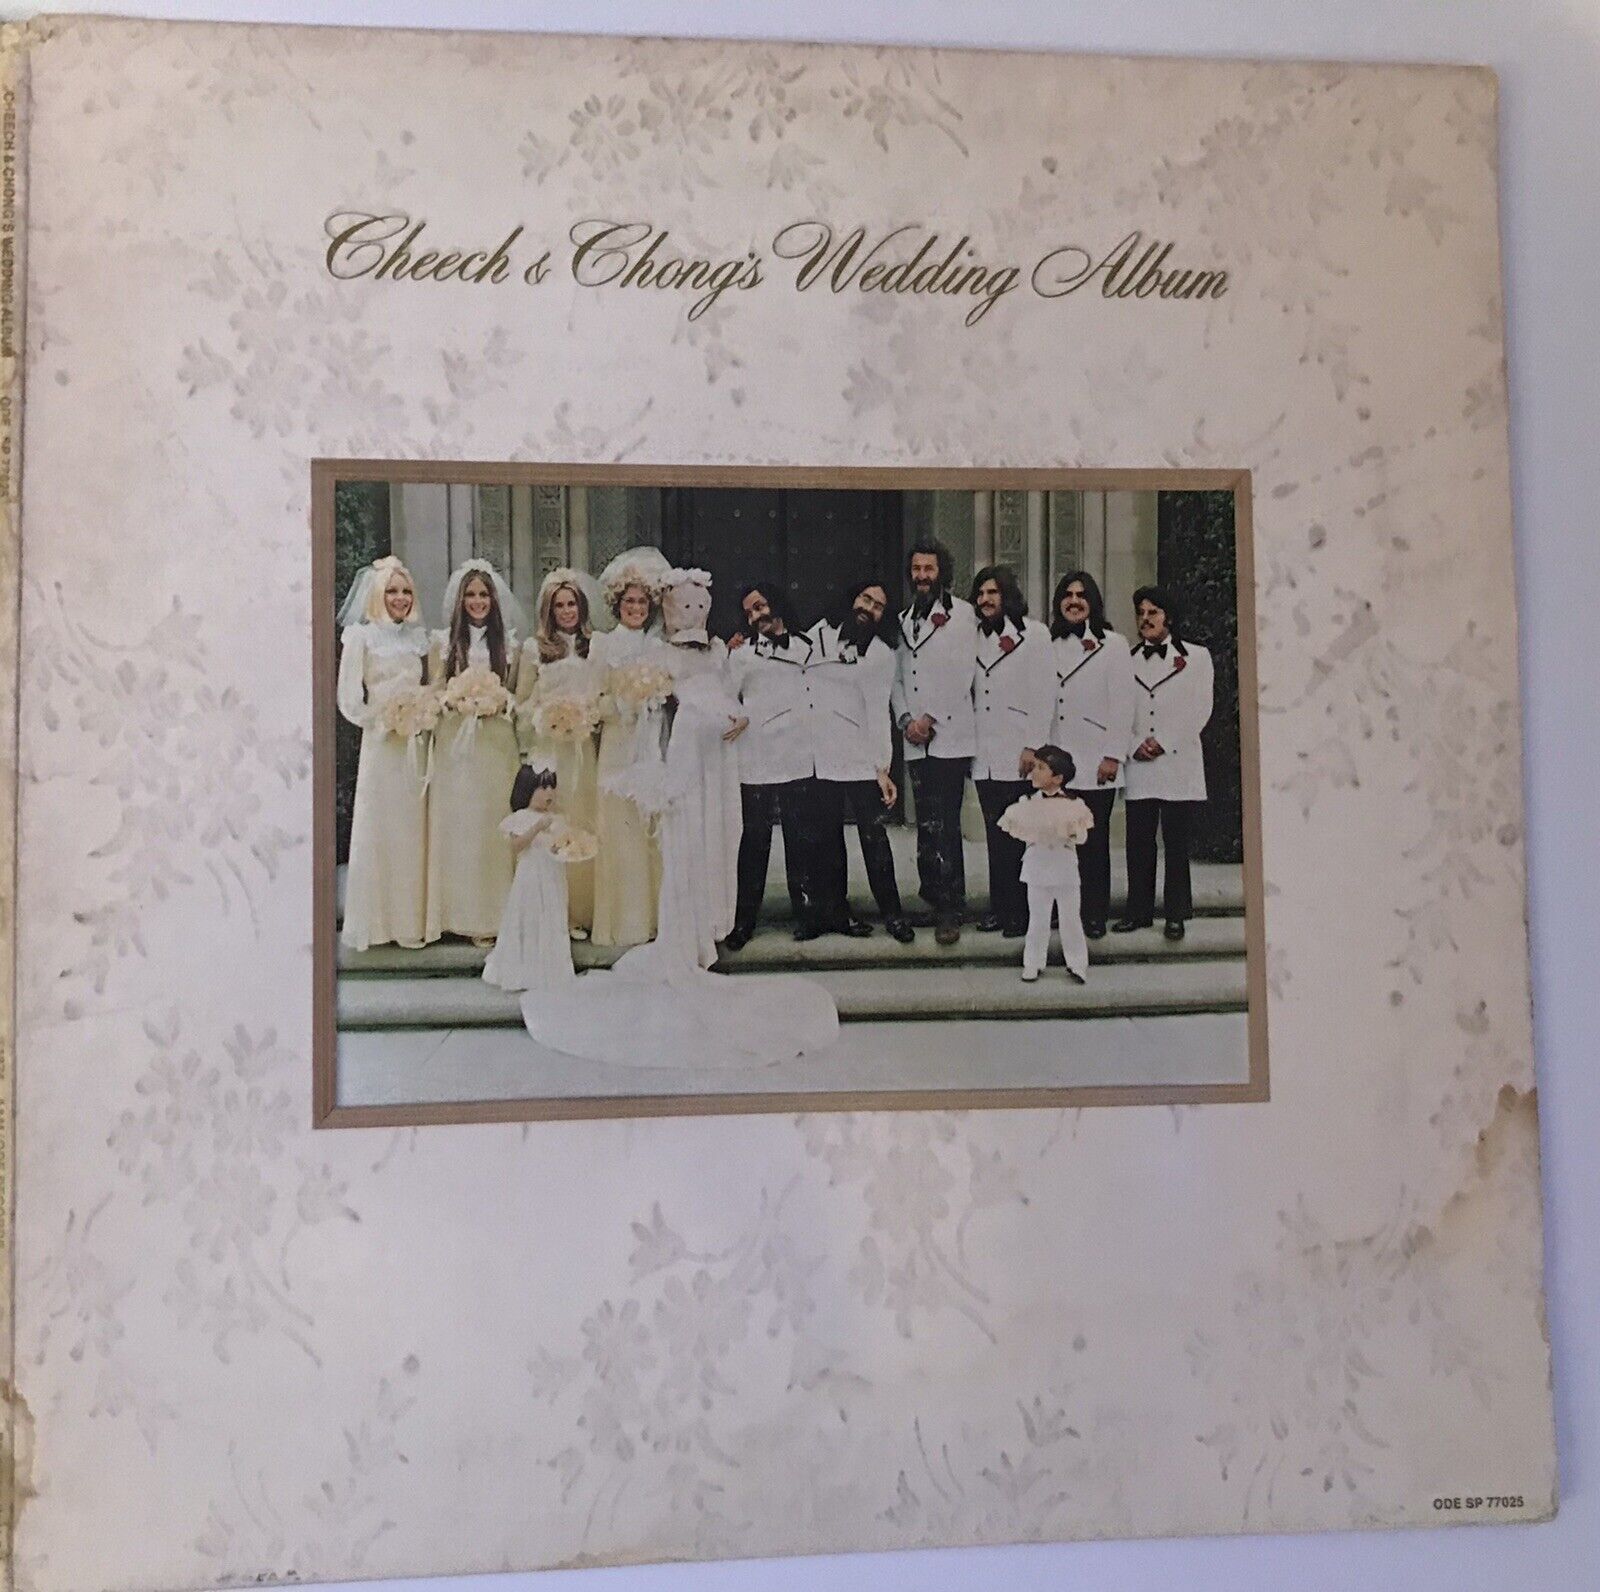 Cheech & Chong’s Wedding Album Vintage 1974 Vinyl